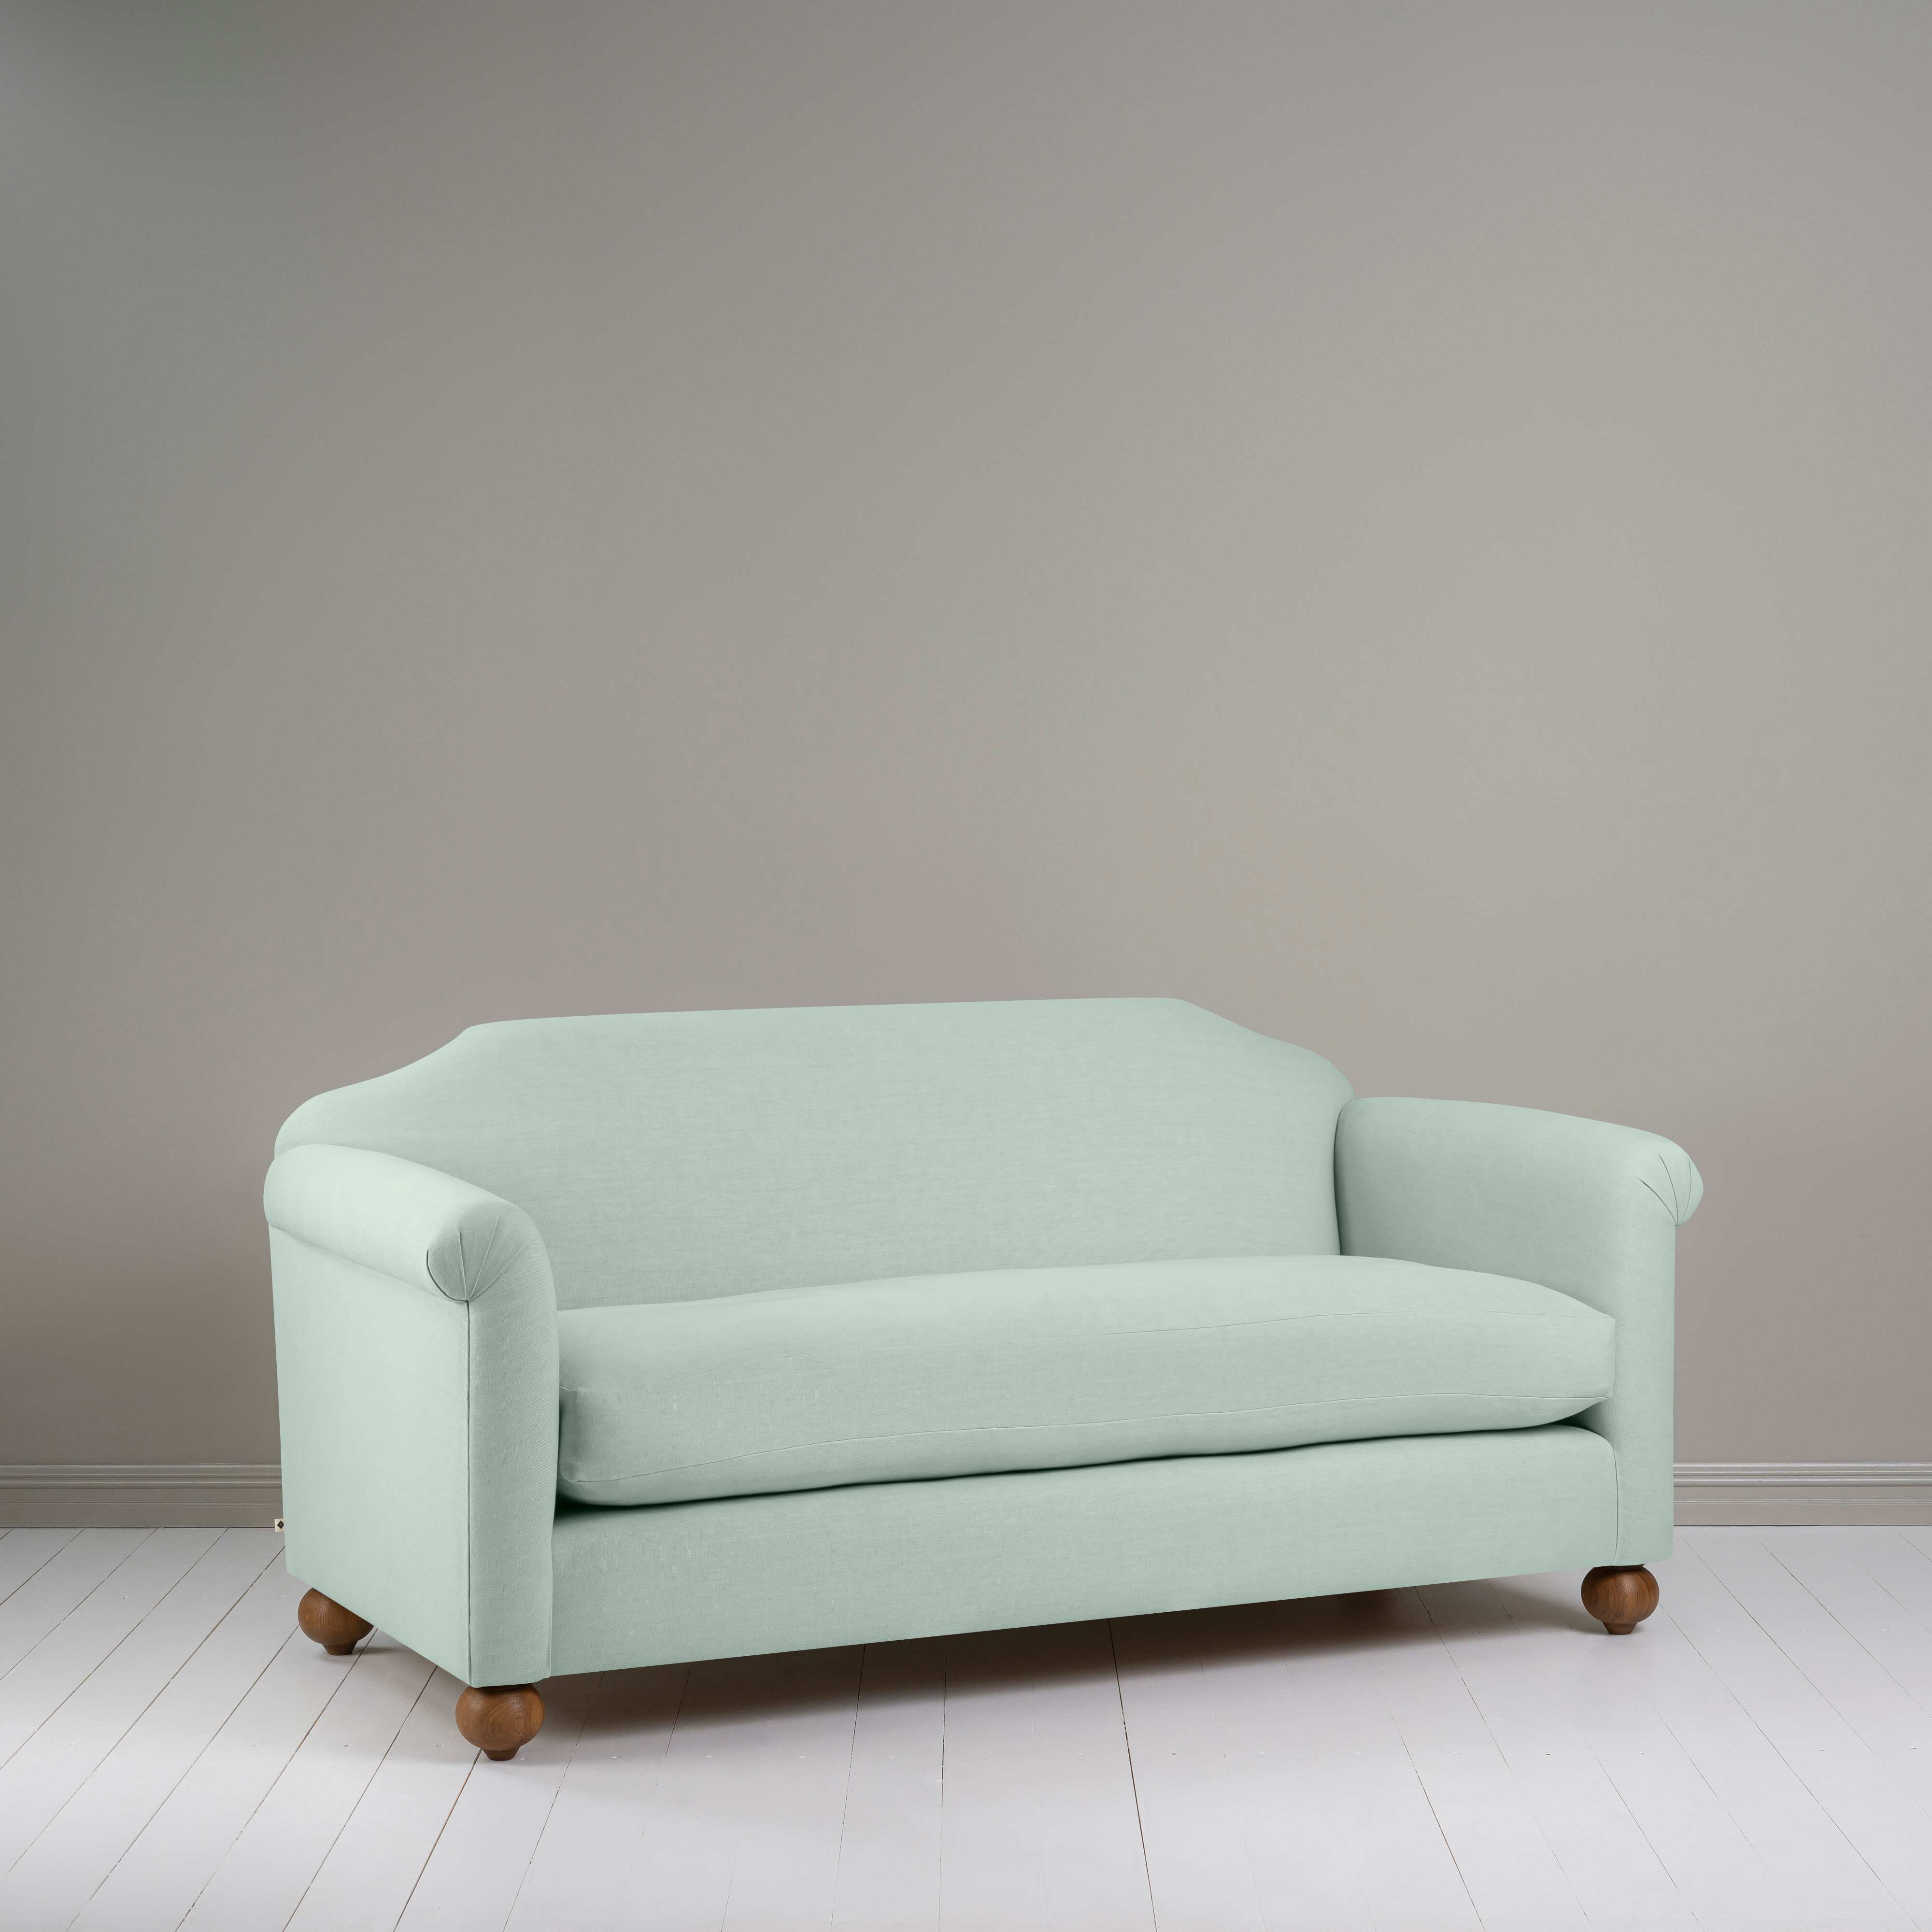  Dolittle 3 Seater Sofa in Laidback Linen Sky 